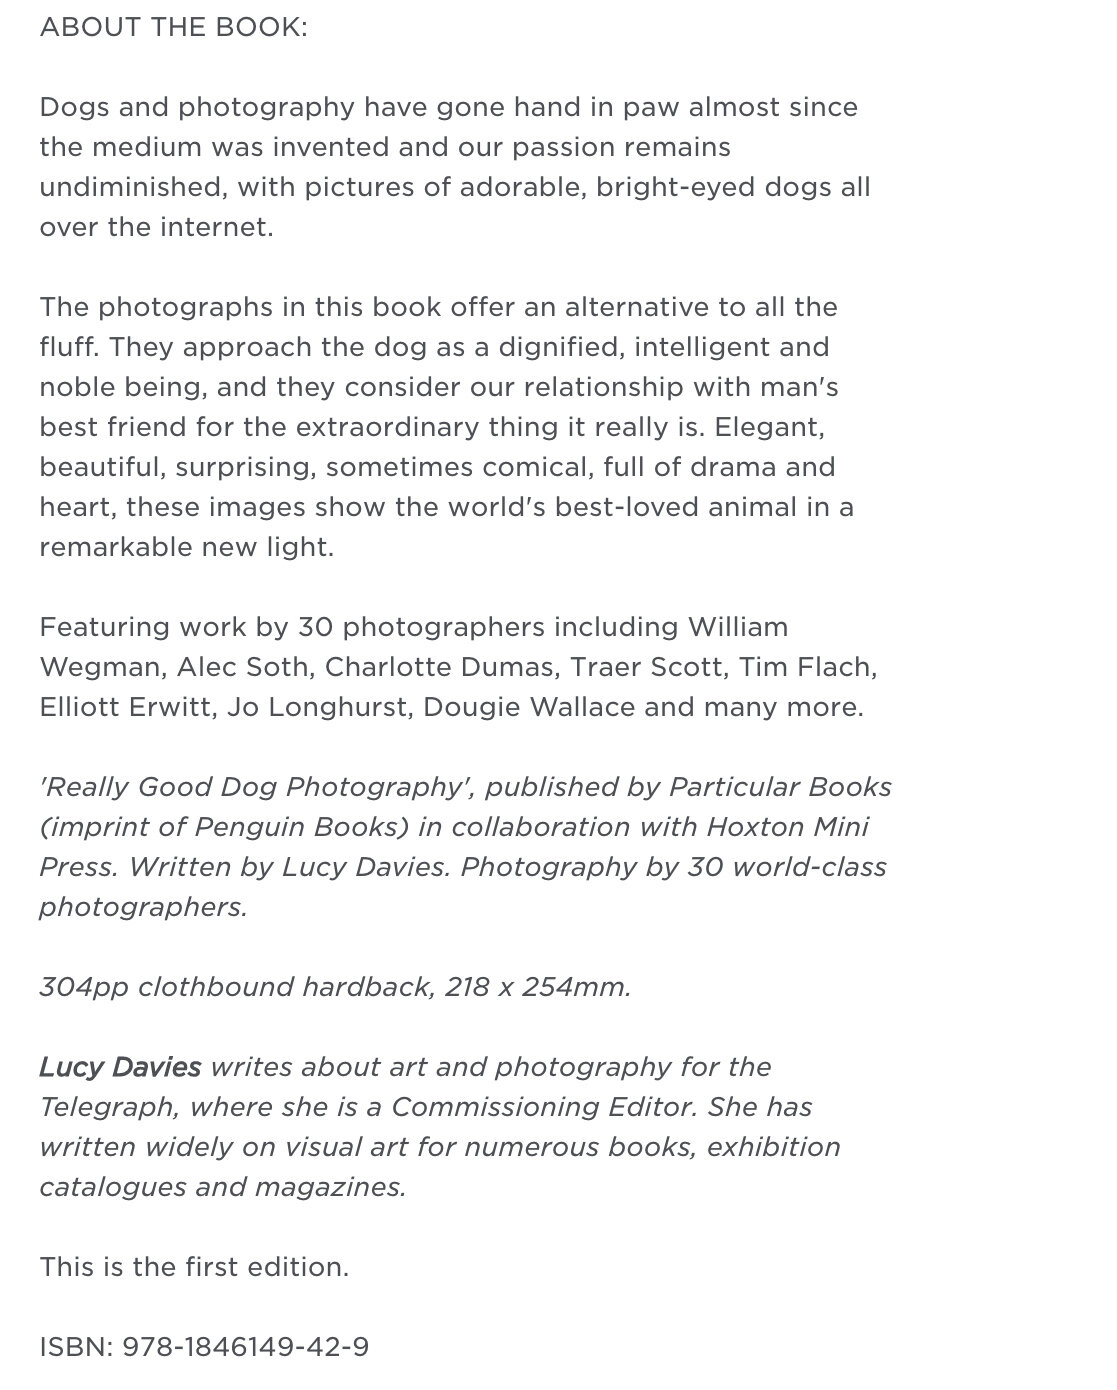 Really Good Dog Photography Blurb.jpg